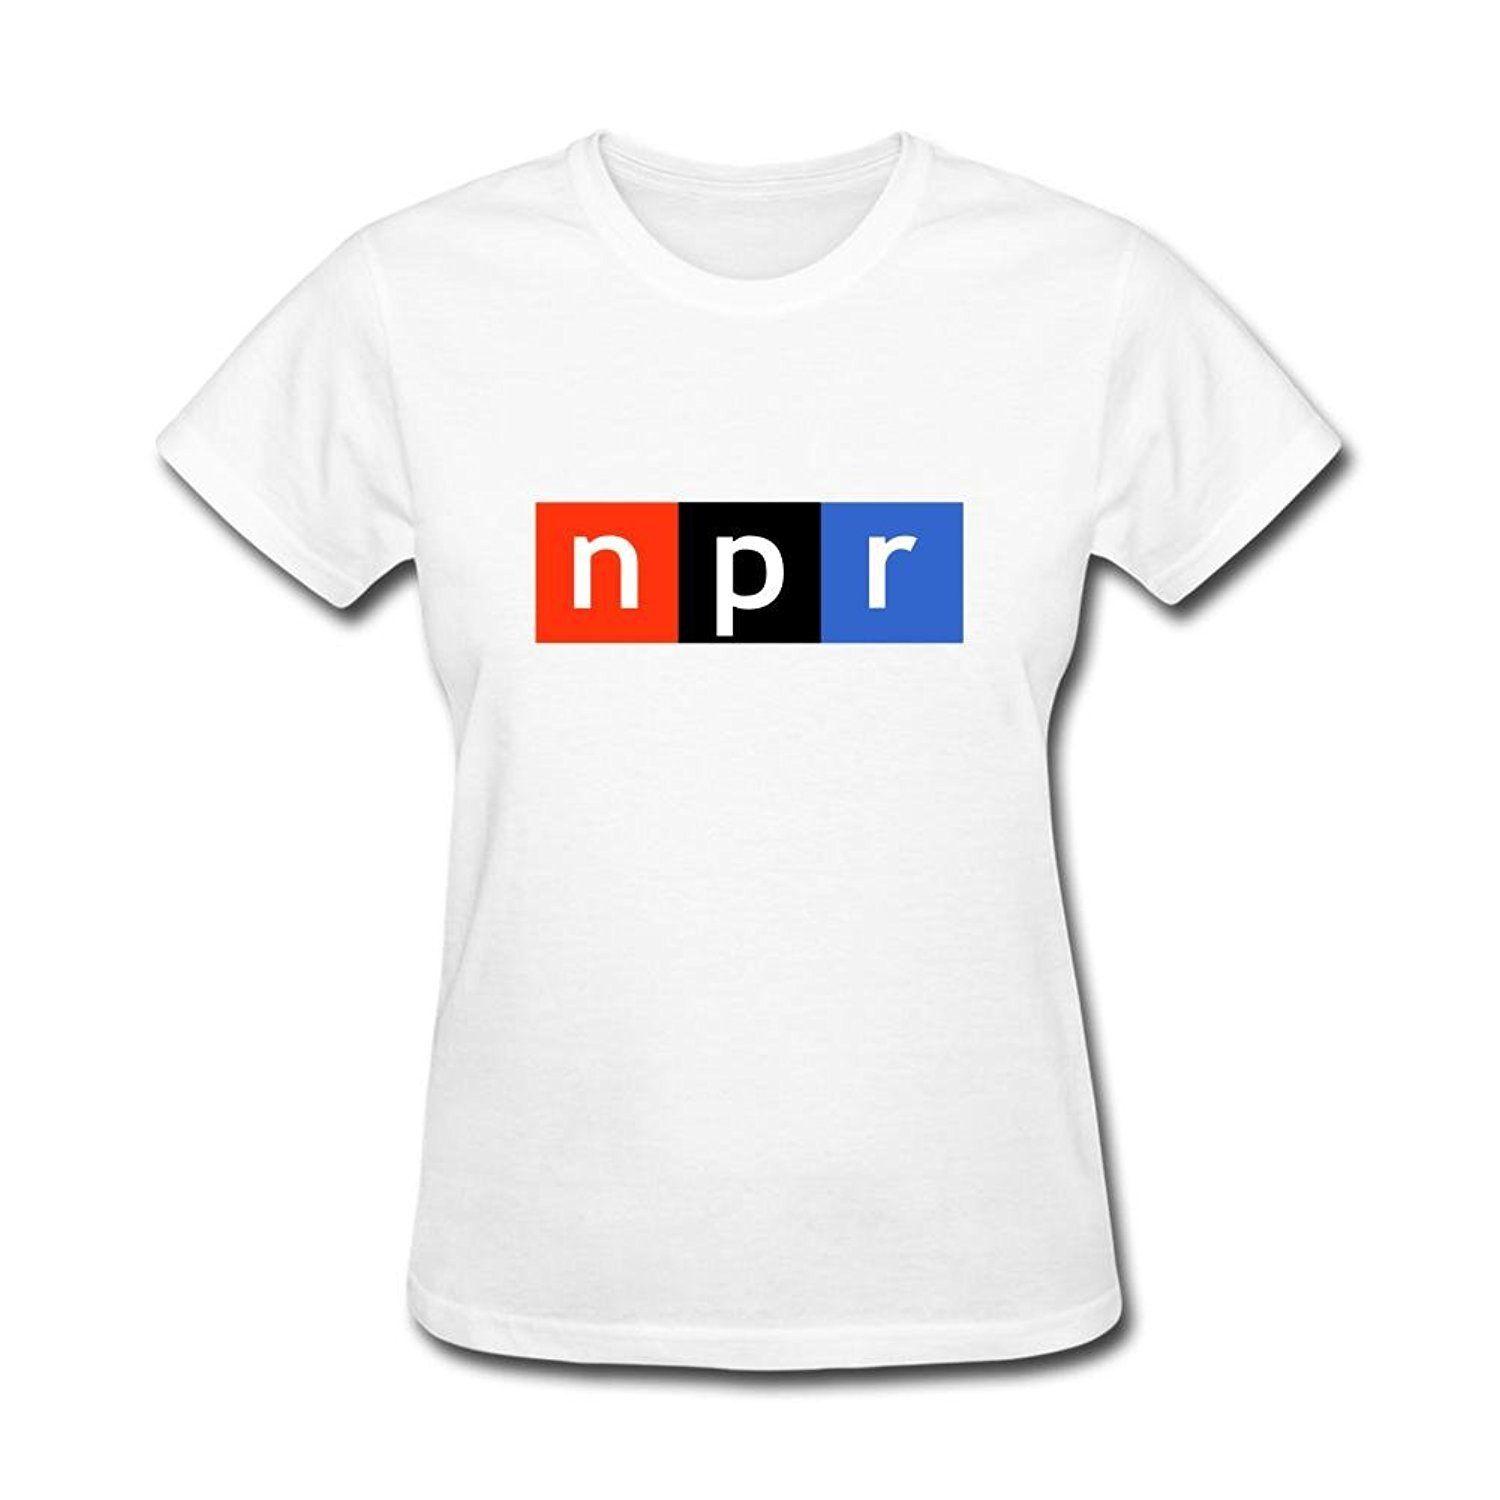 NPR Logo - Yamoon Women's White NPR Logo Cotton Short Sleeve T